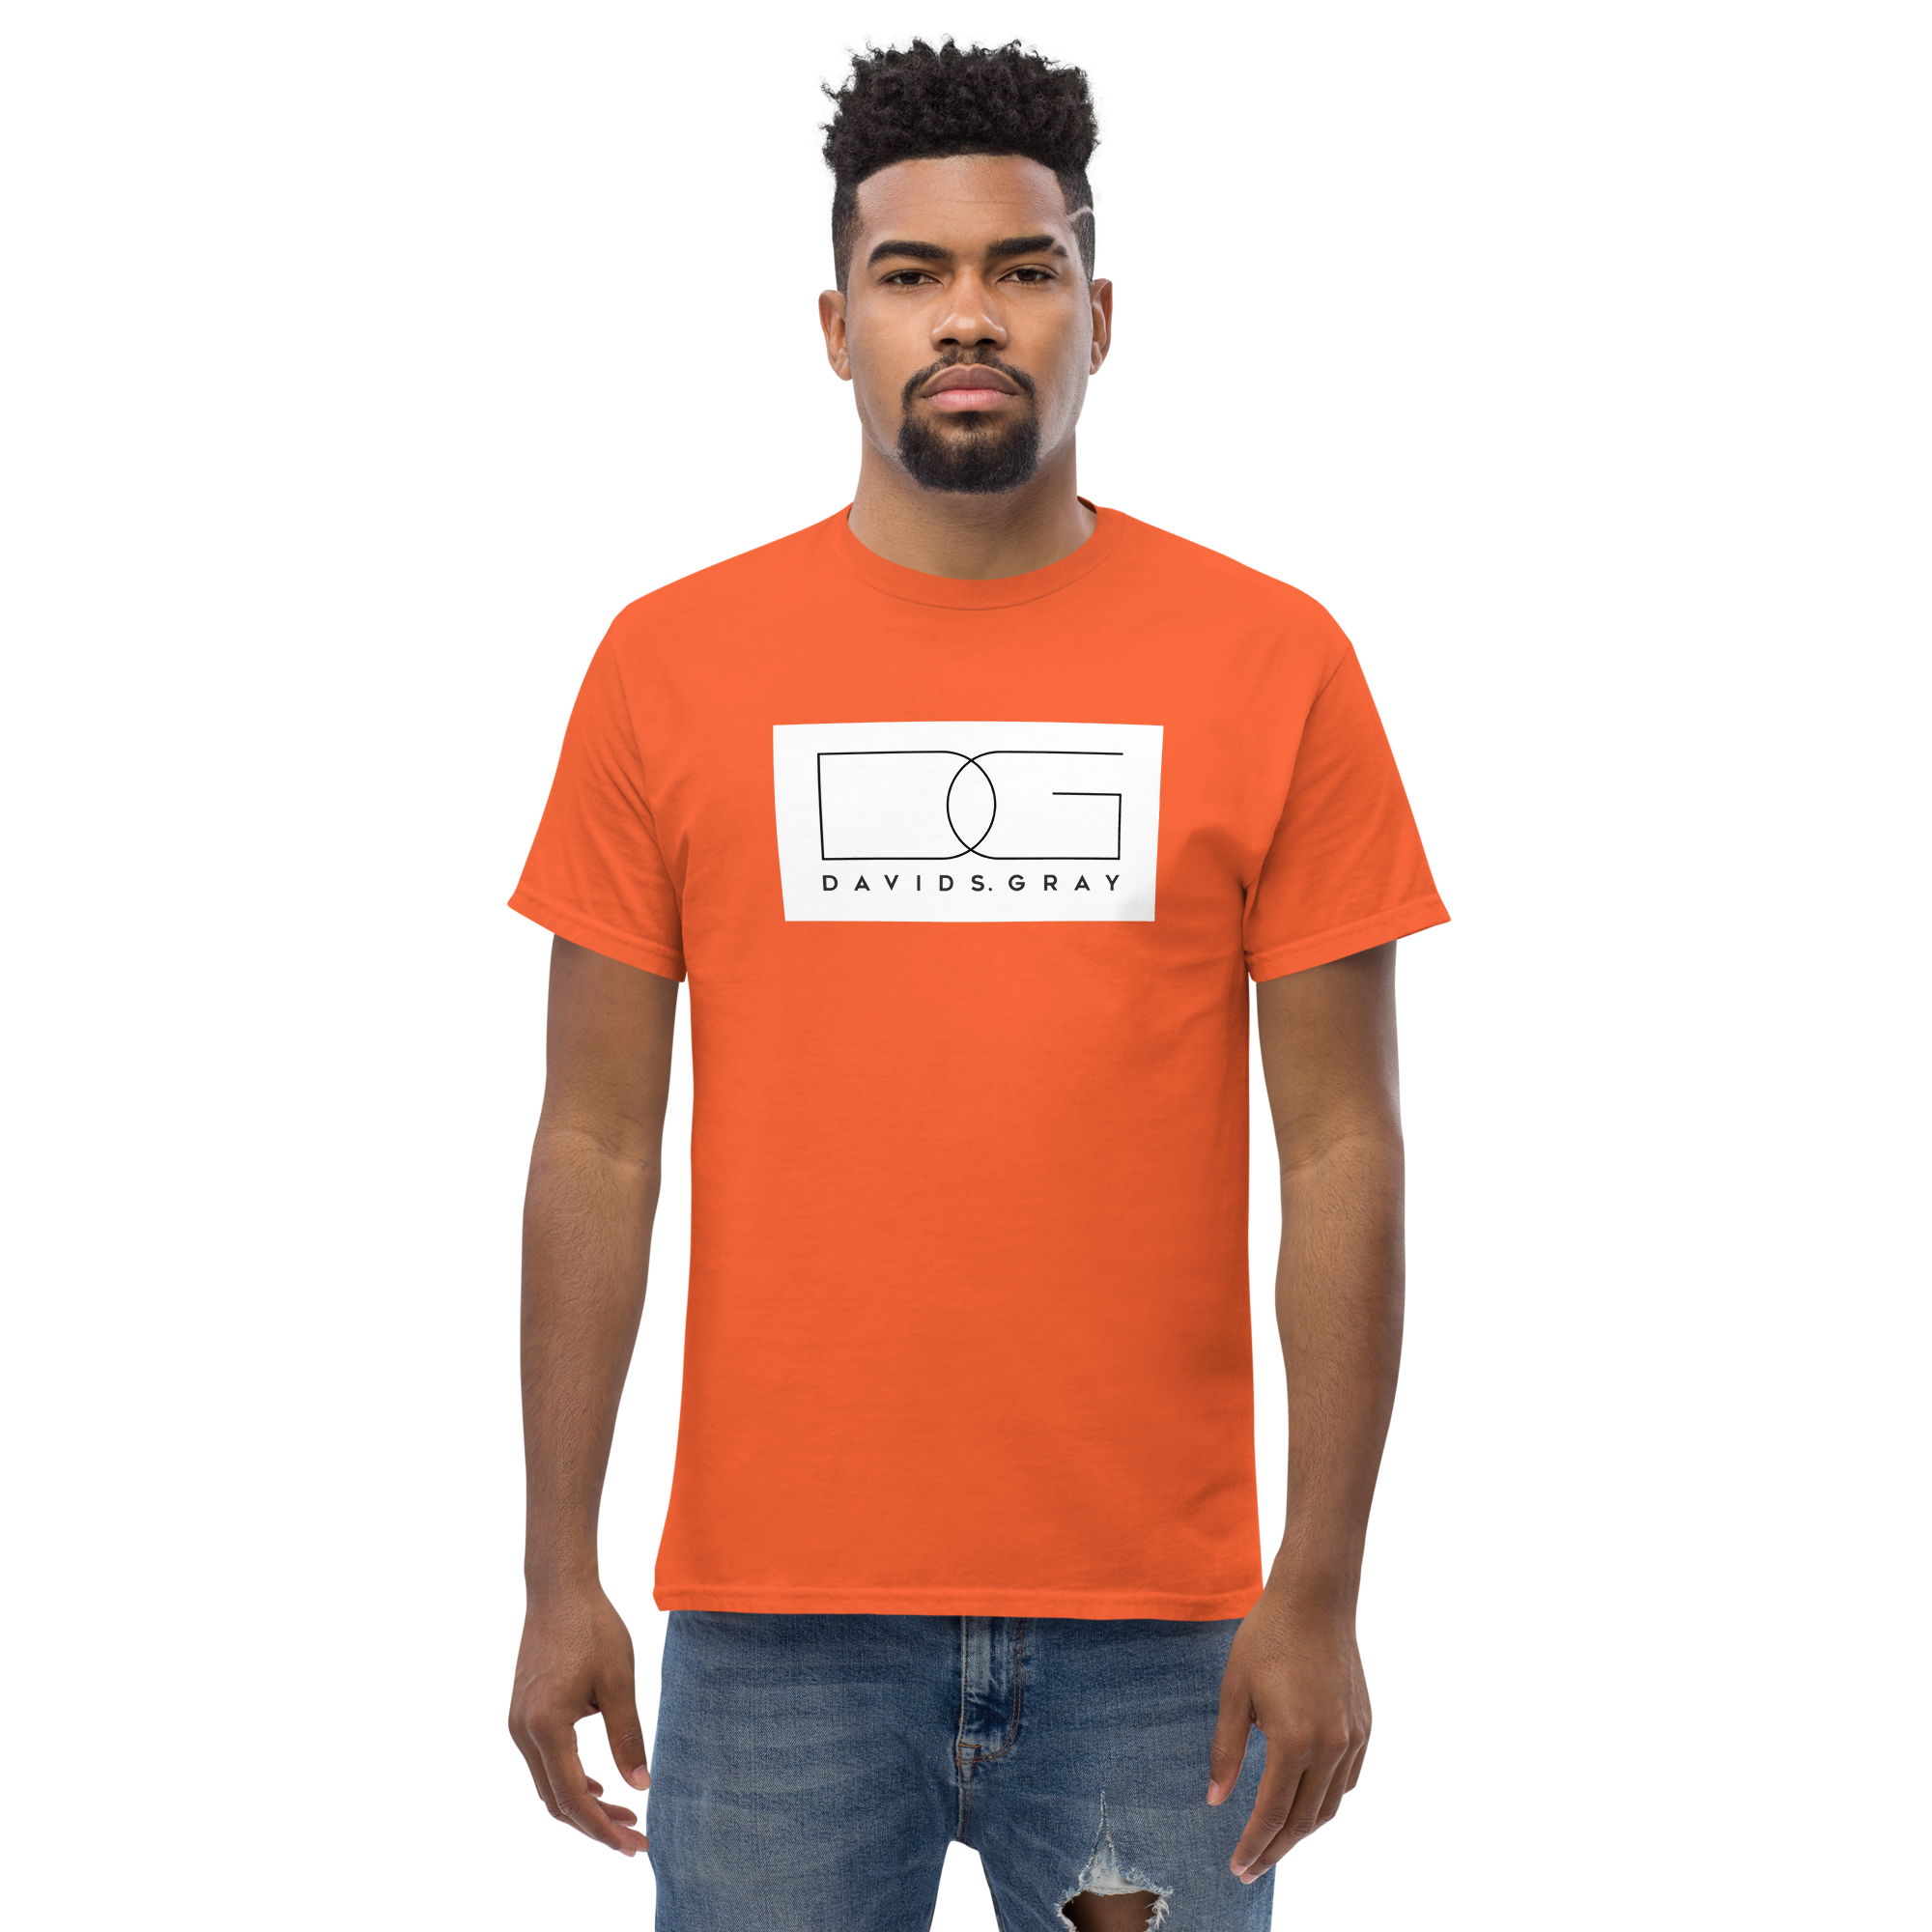 David S Gray - Short-Sleeve Unisex T-Shirt